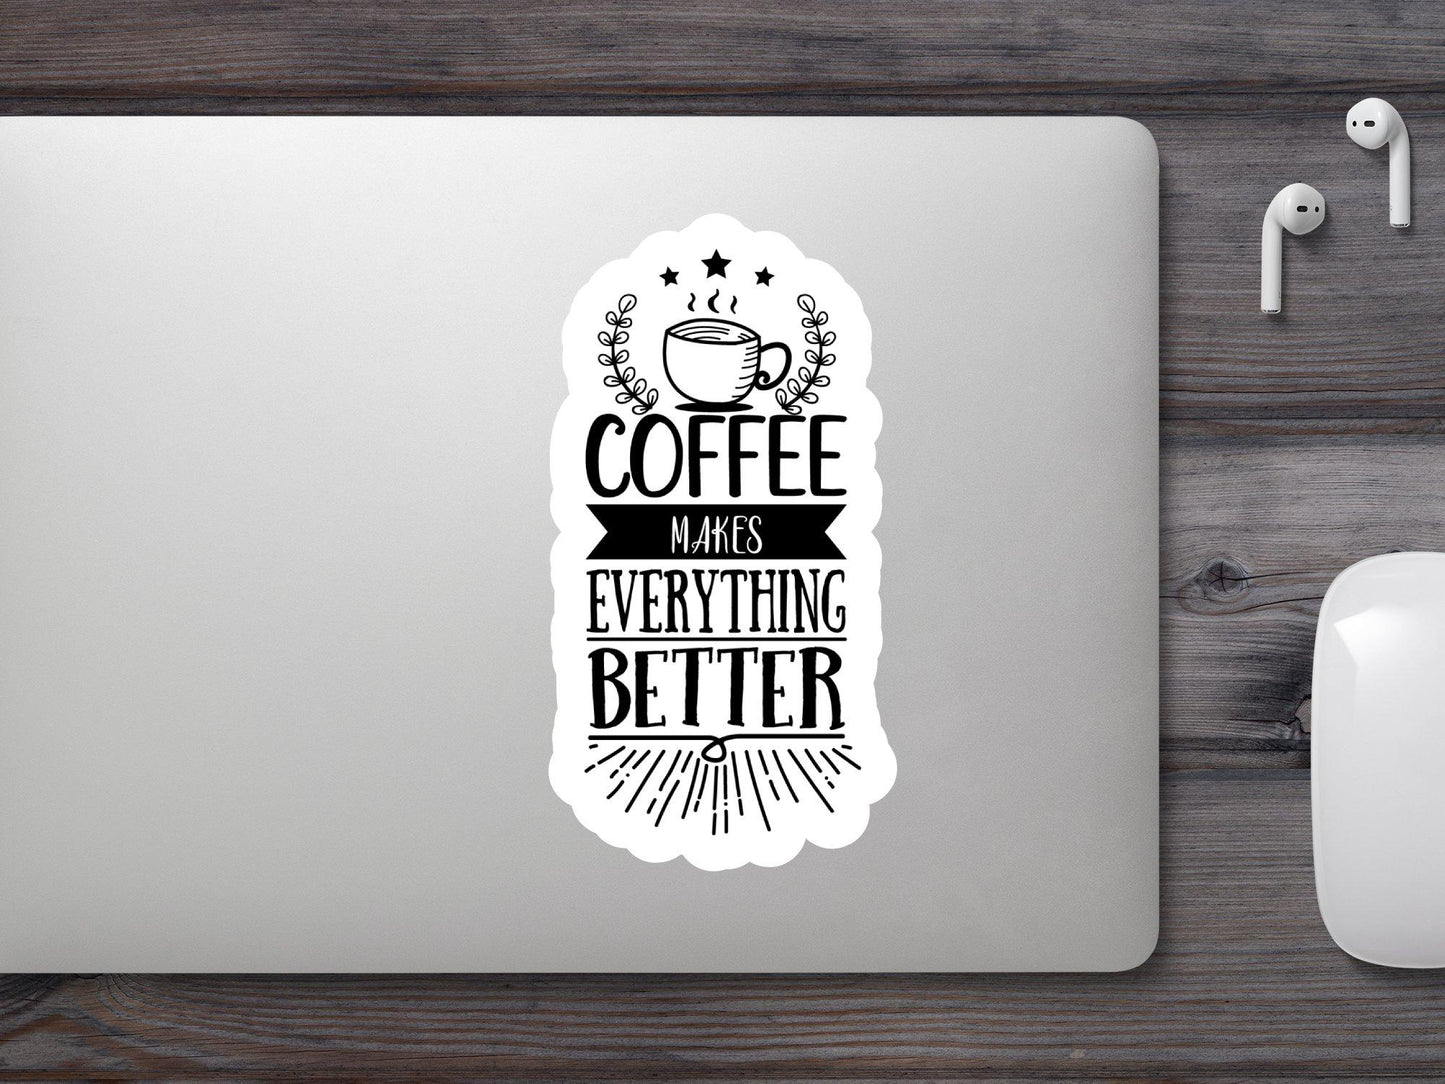 Coffee Make Everything Better Sticker